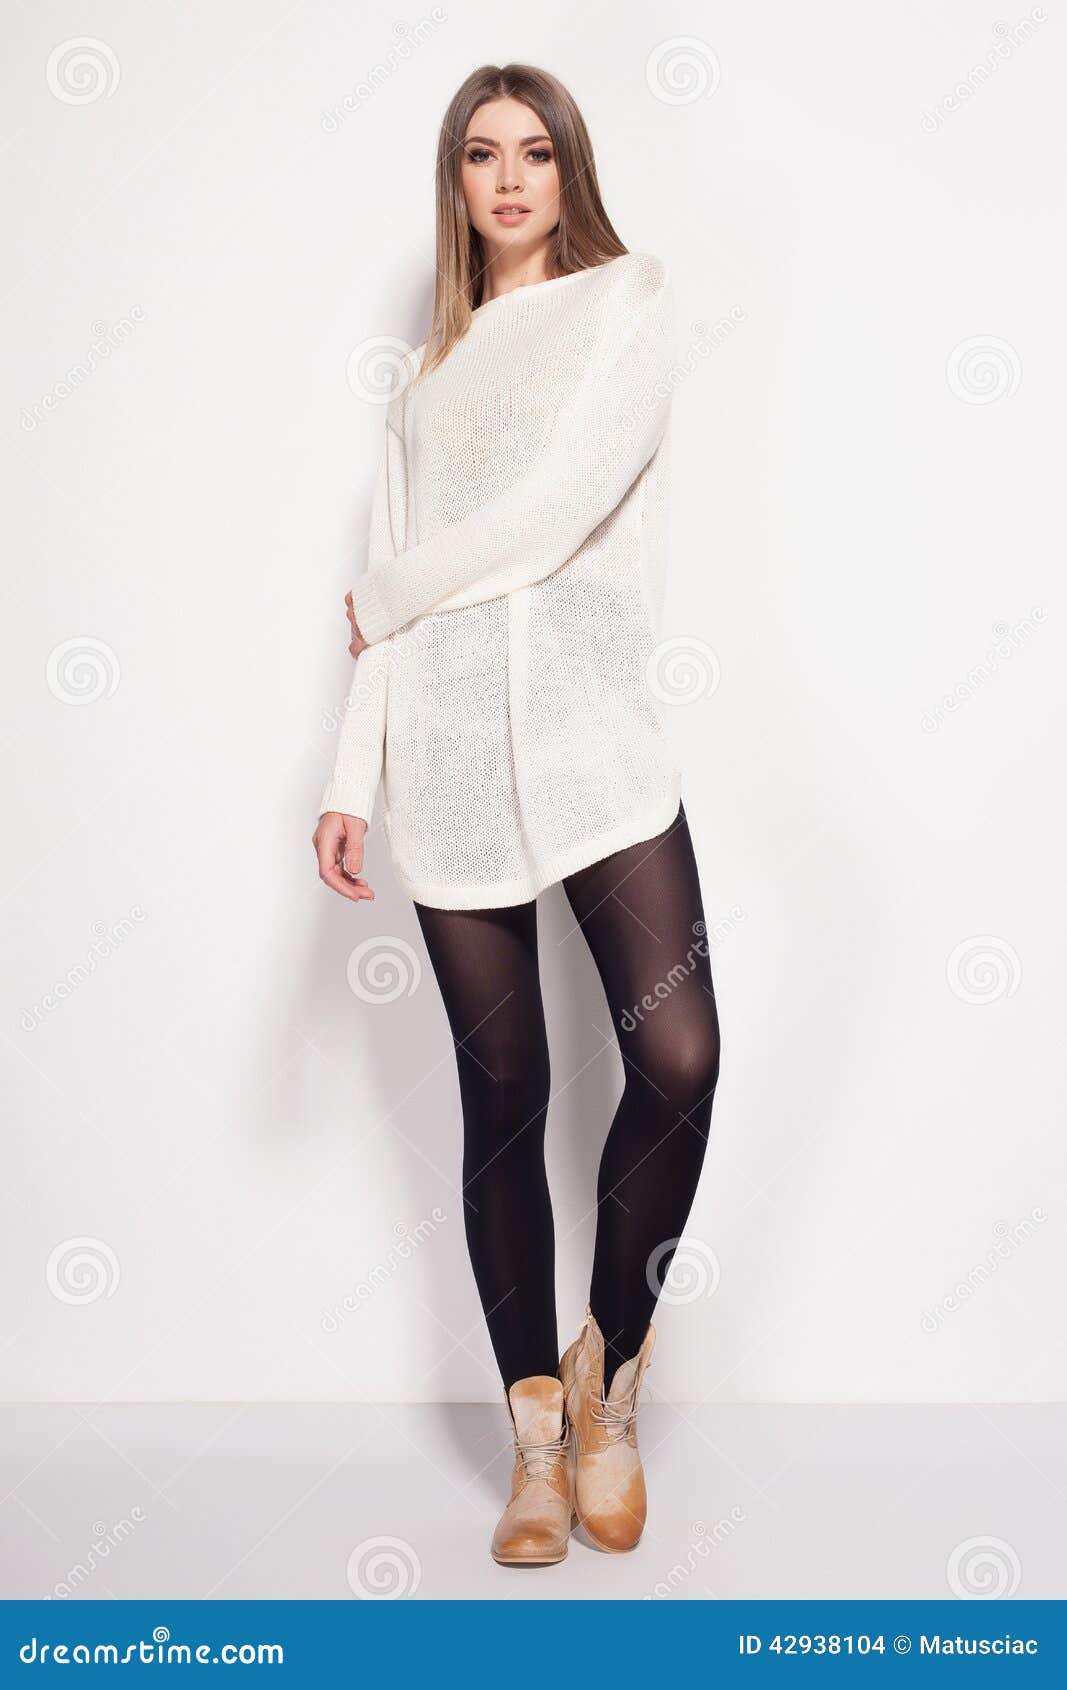 Beautiful Woman with Long Legs Dressed Elegant Posing in the Studio ...